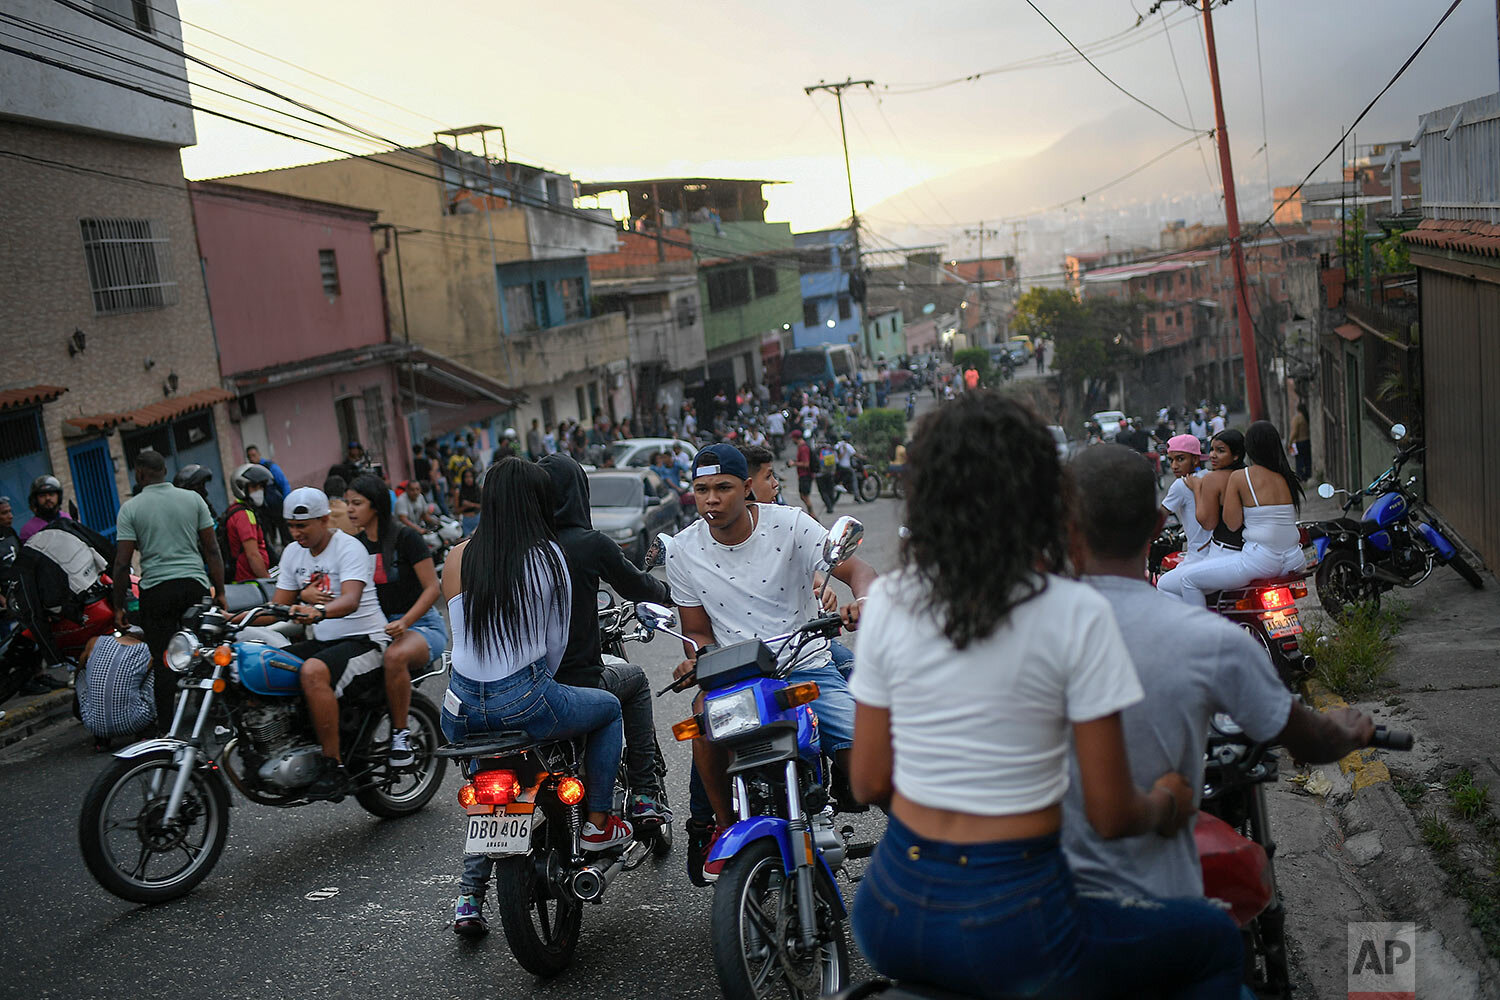  Motorcycle riders gather to see stuntman Pedro Aldana do an exhibition performance in Caracas, Venezuela, Sunday, Jan. 31, 2021. (AP Photo/Matias Delacroix) 